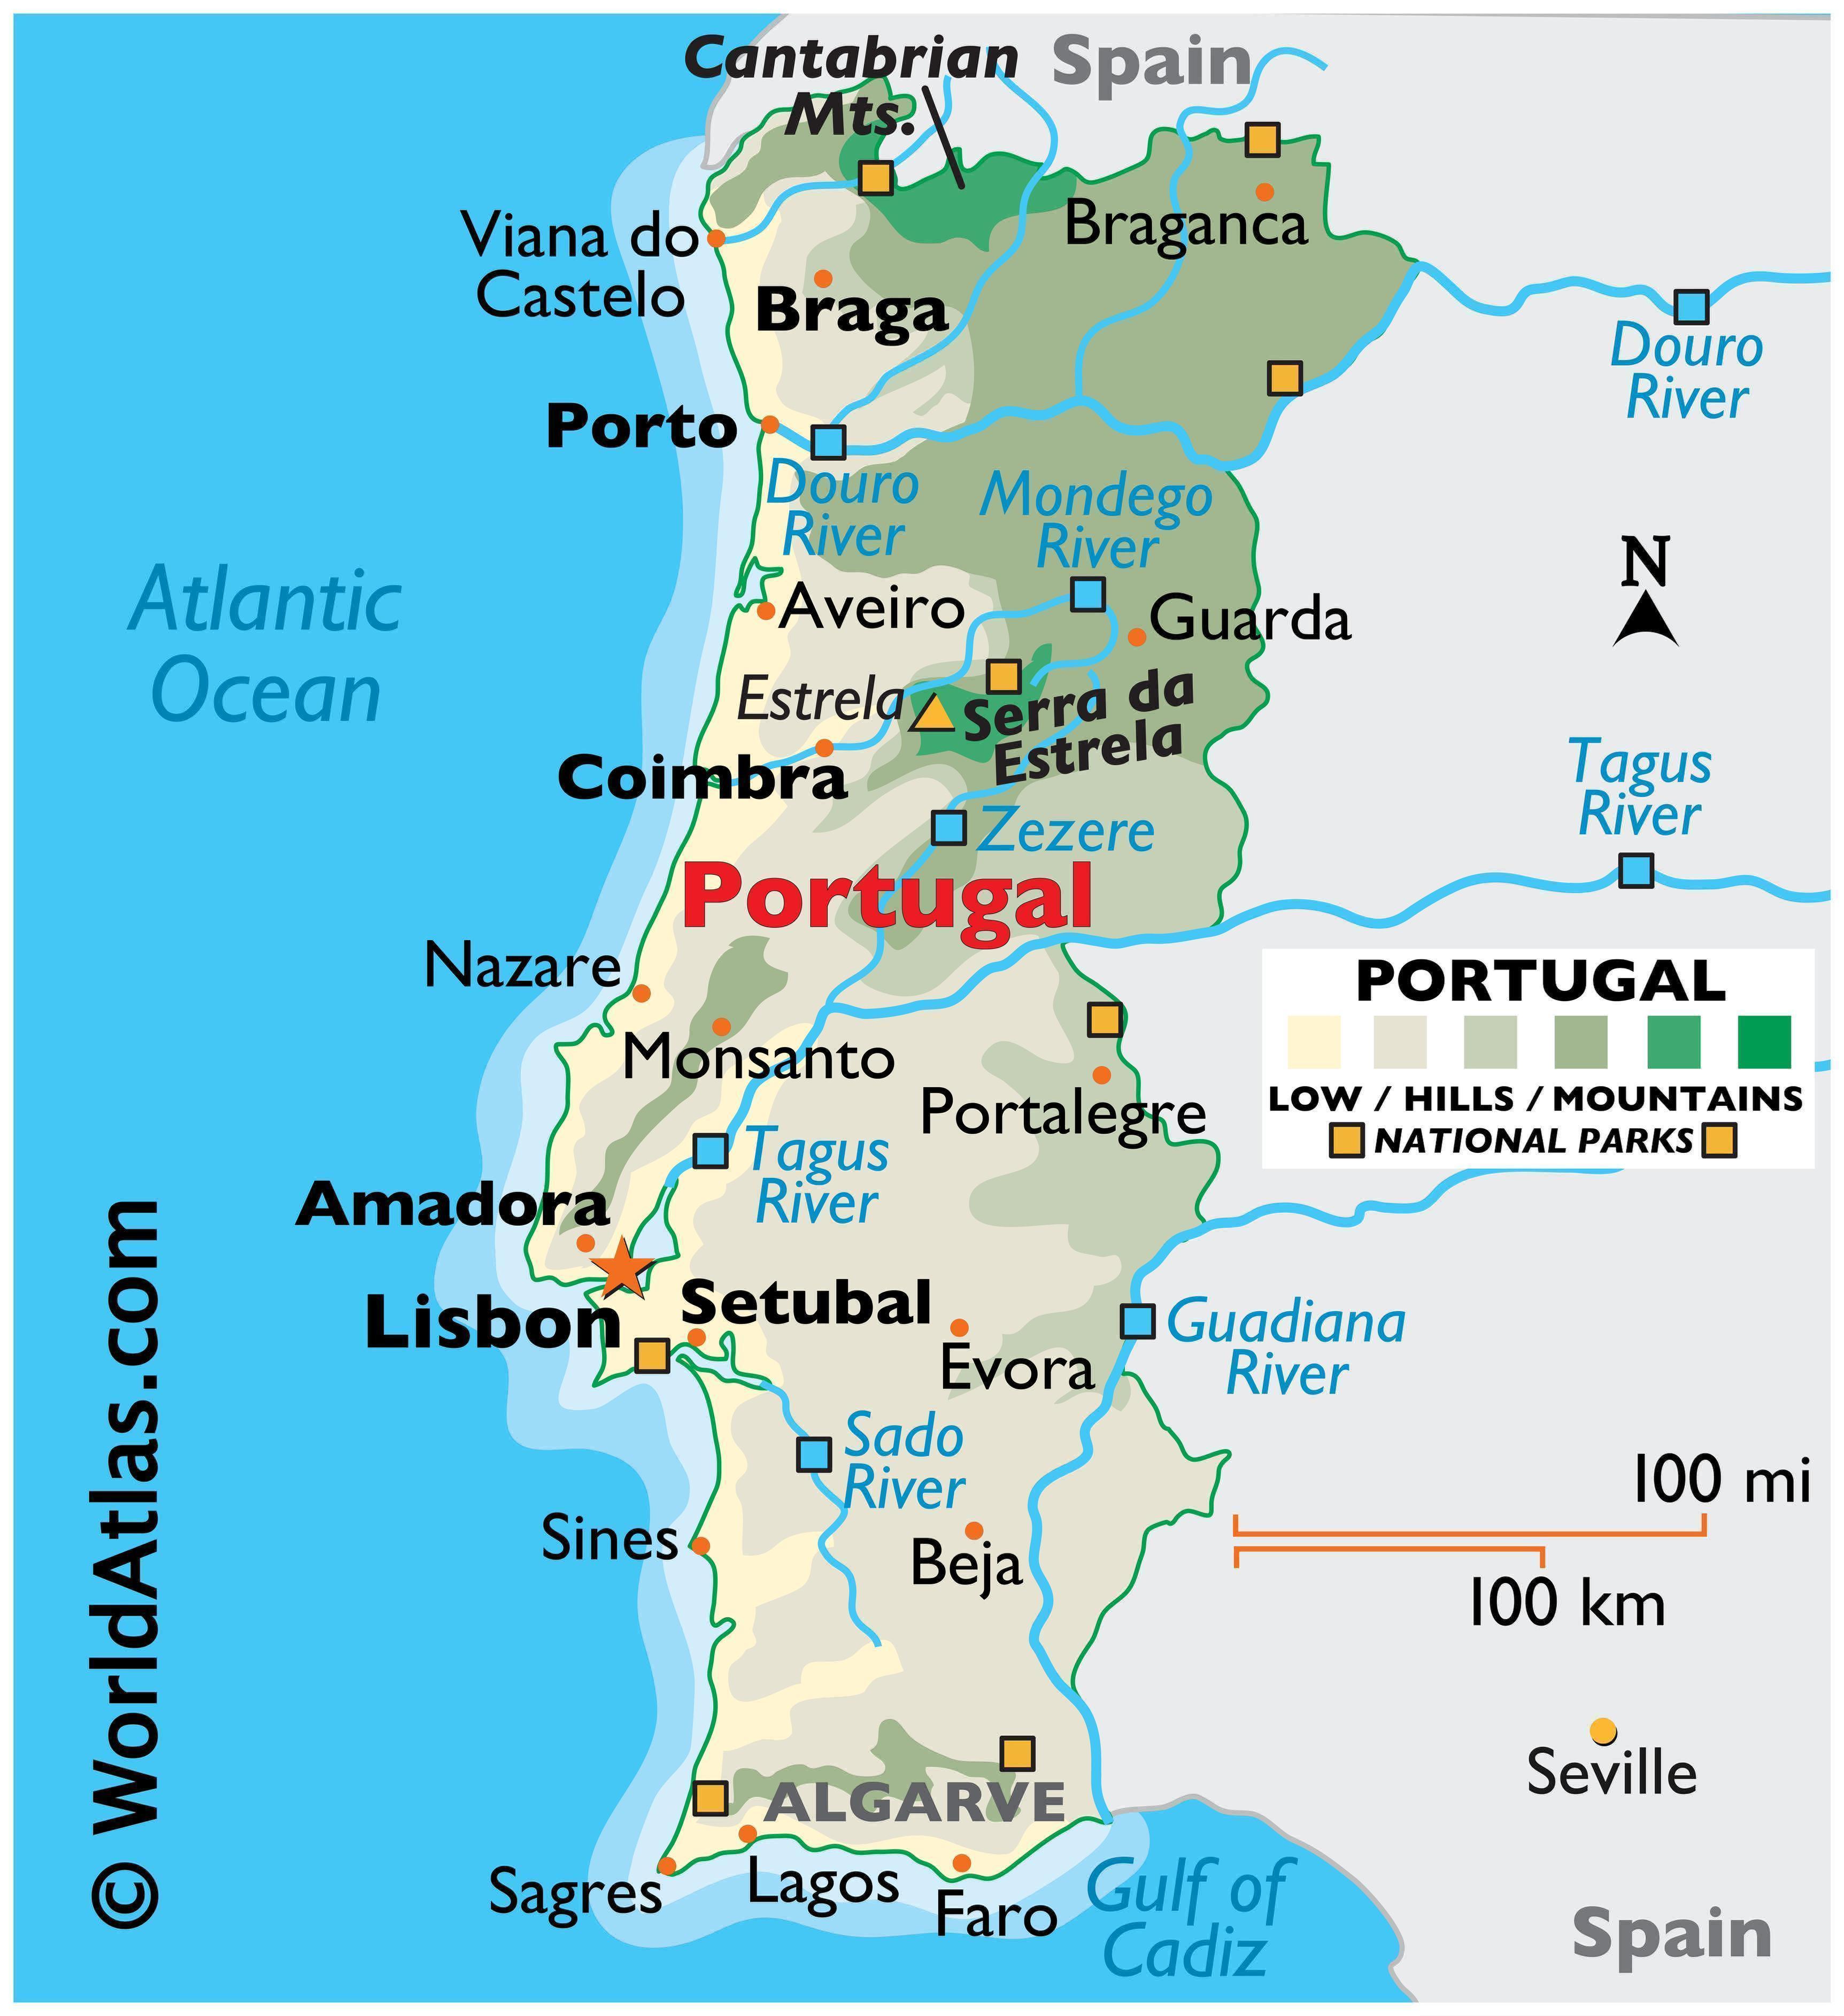 Portugal coast map - Map of Portugal coast (Southern Europe - Europe)